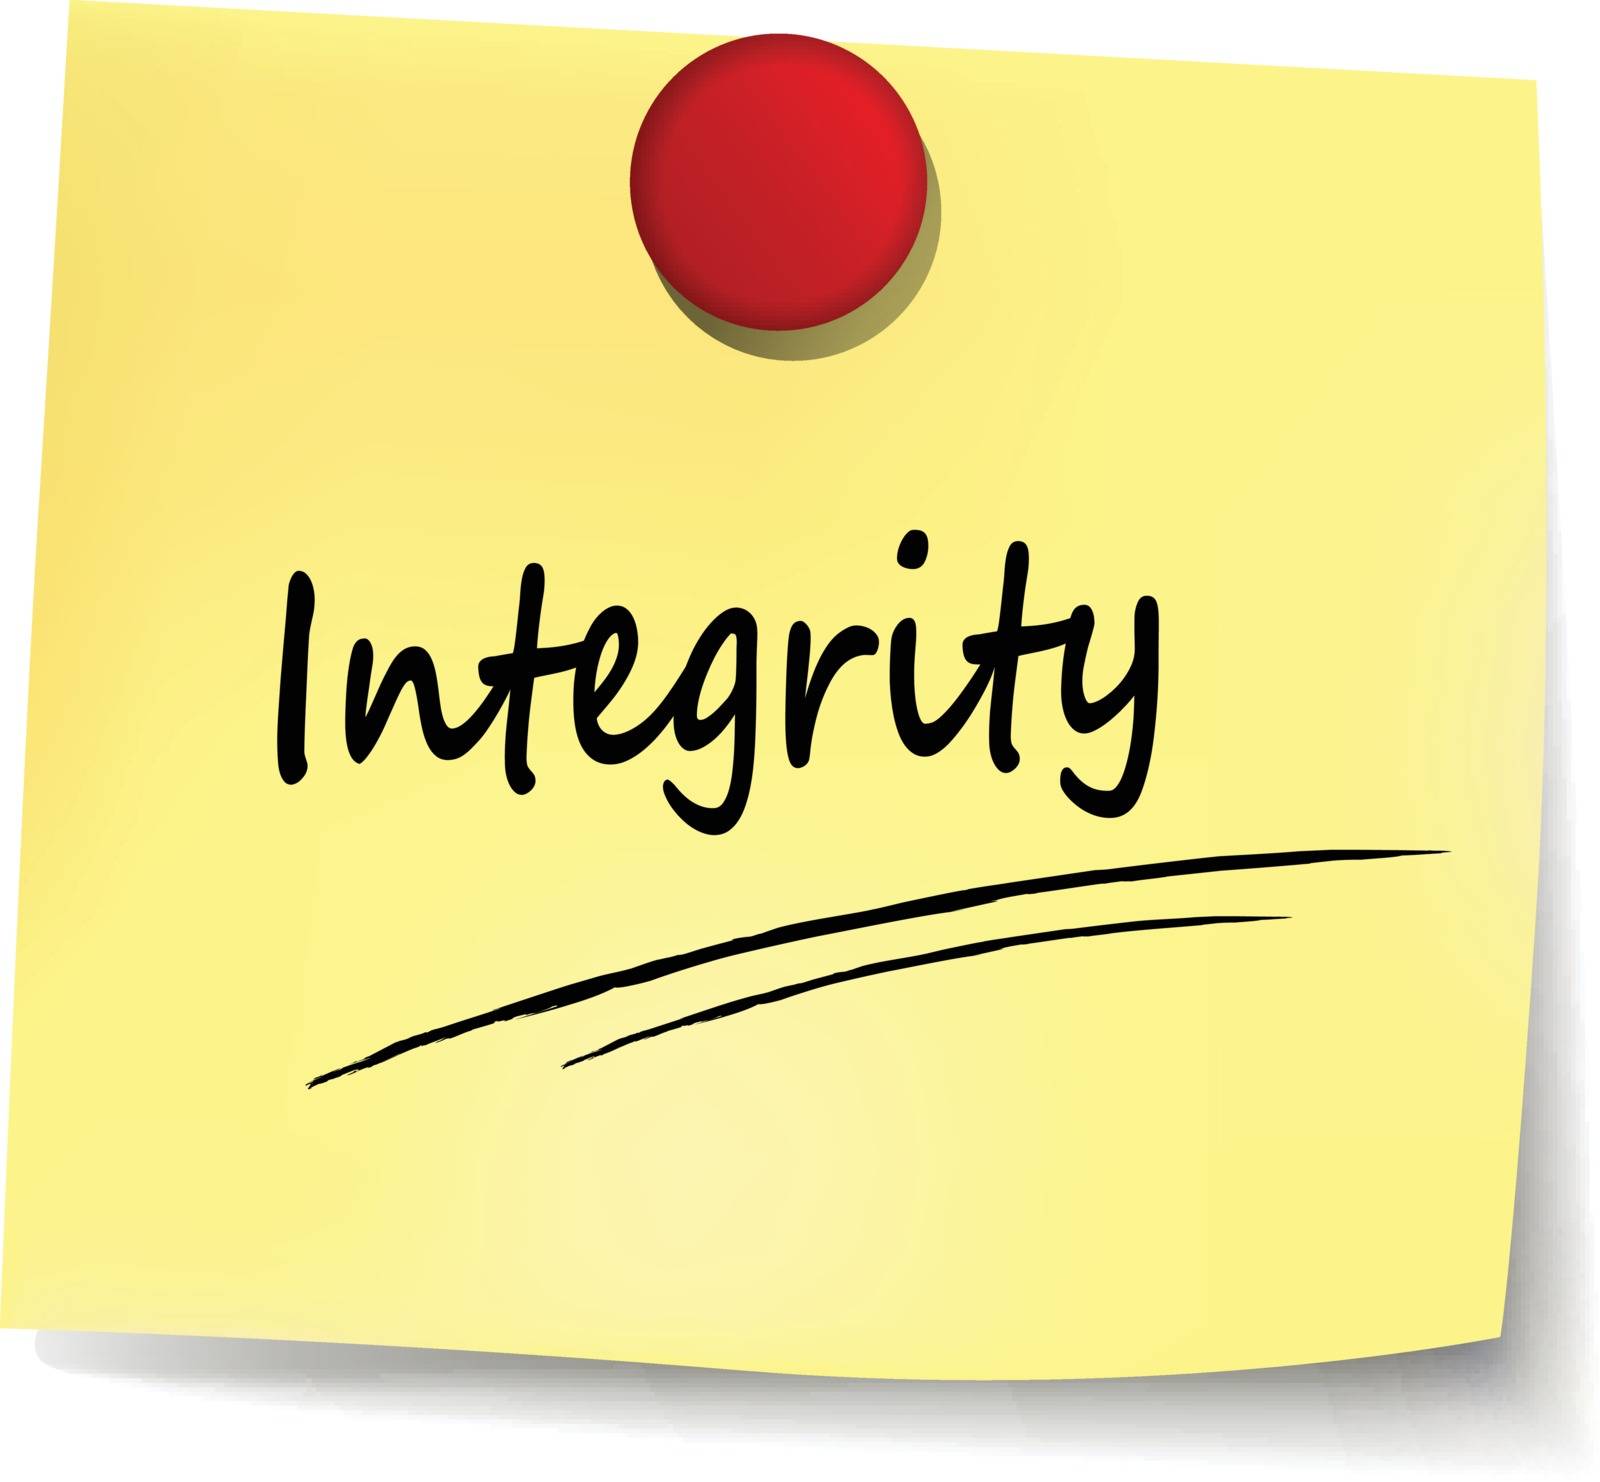 integrity note by nickylarson974